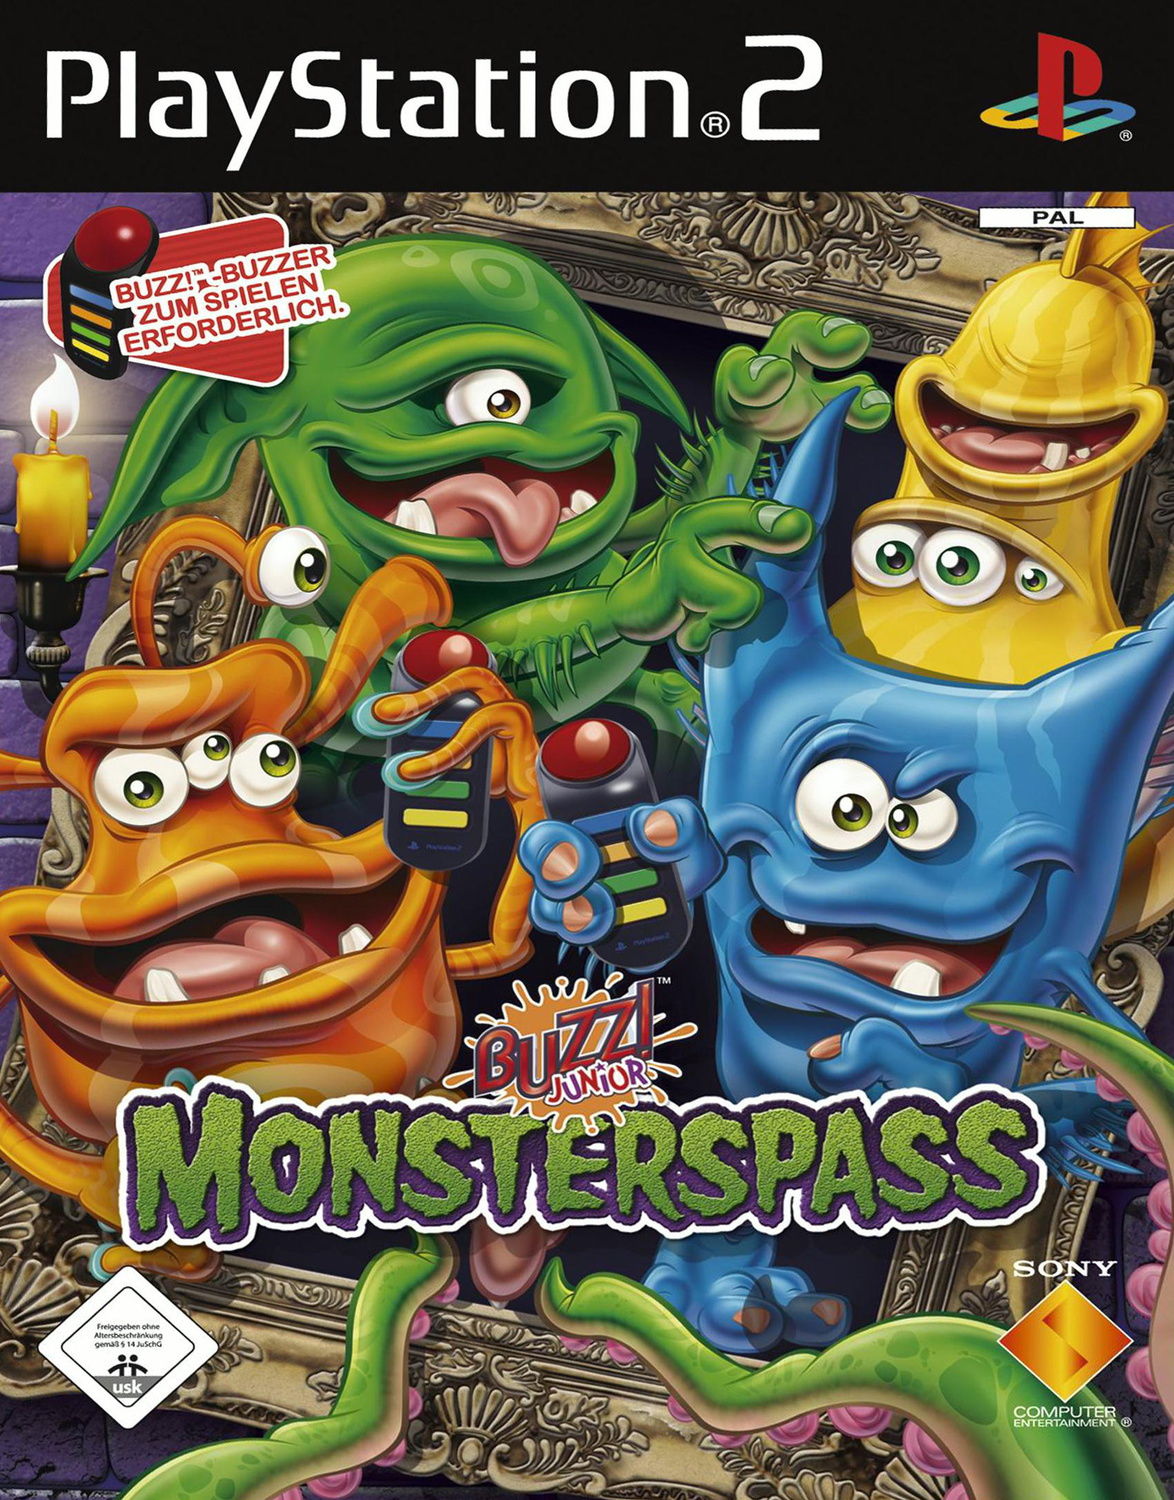 Monsterspass - PlayStation 2 Játékok